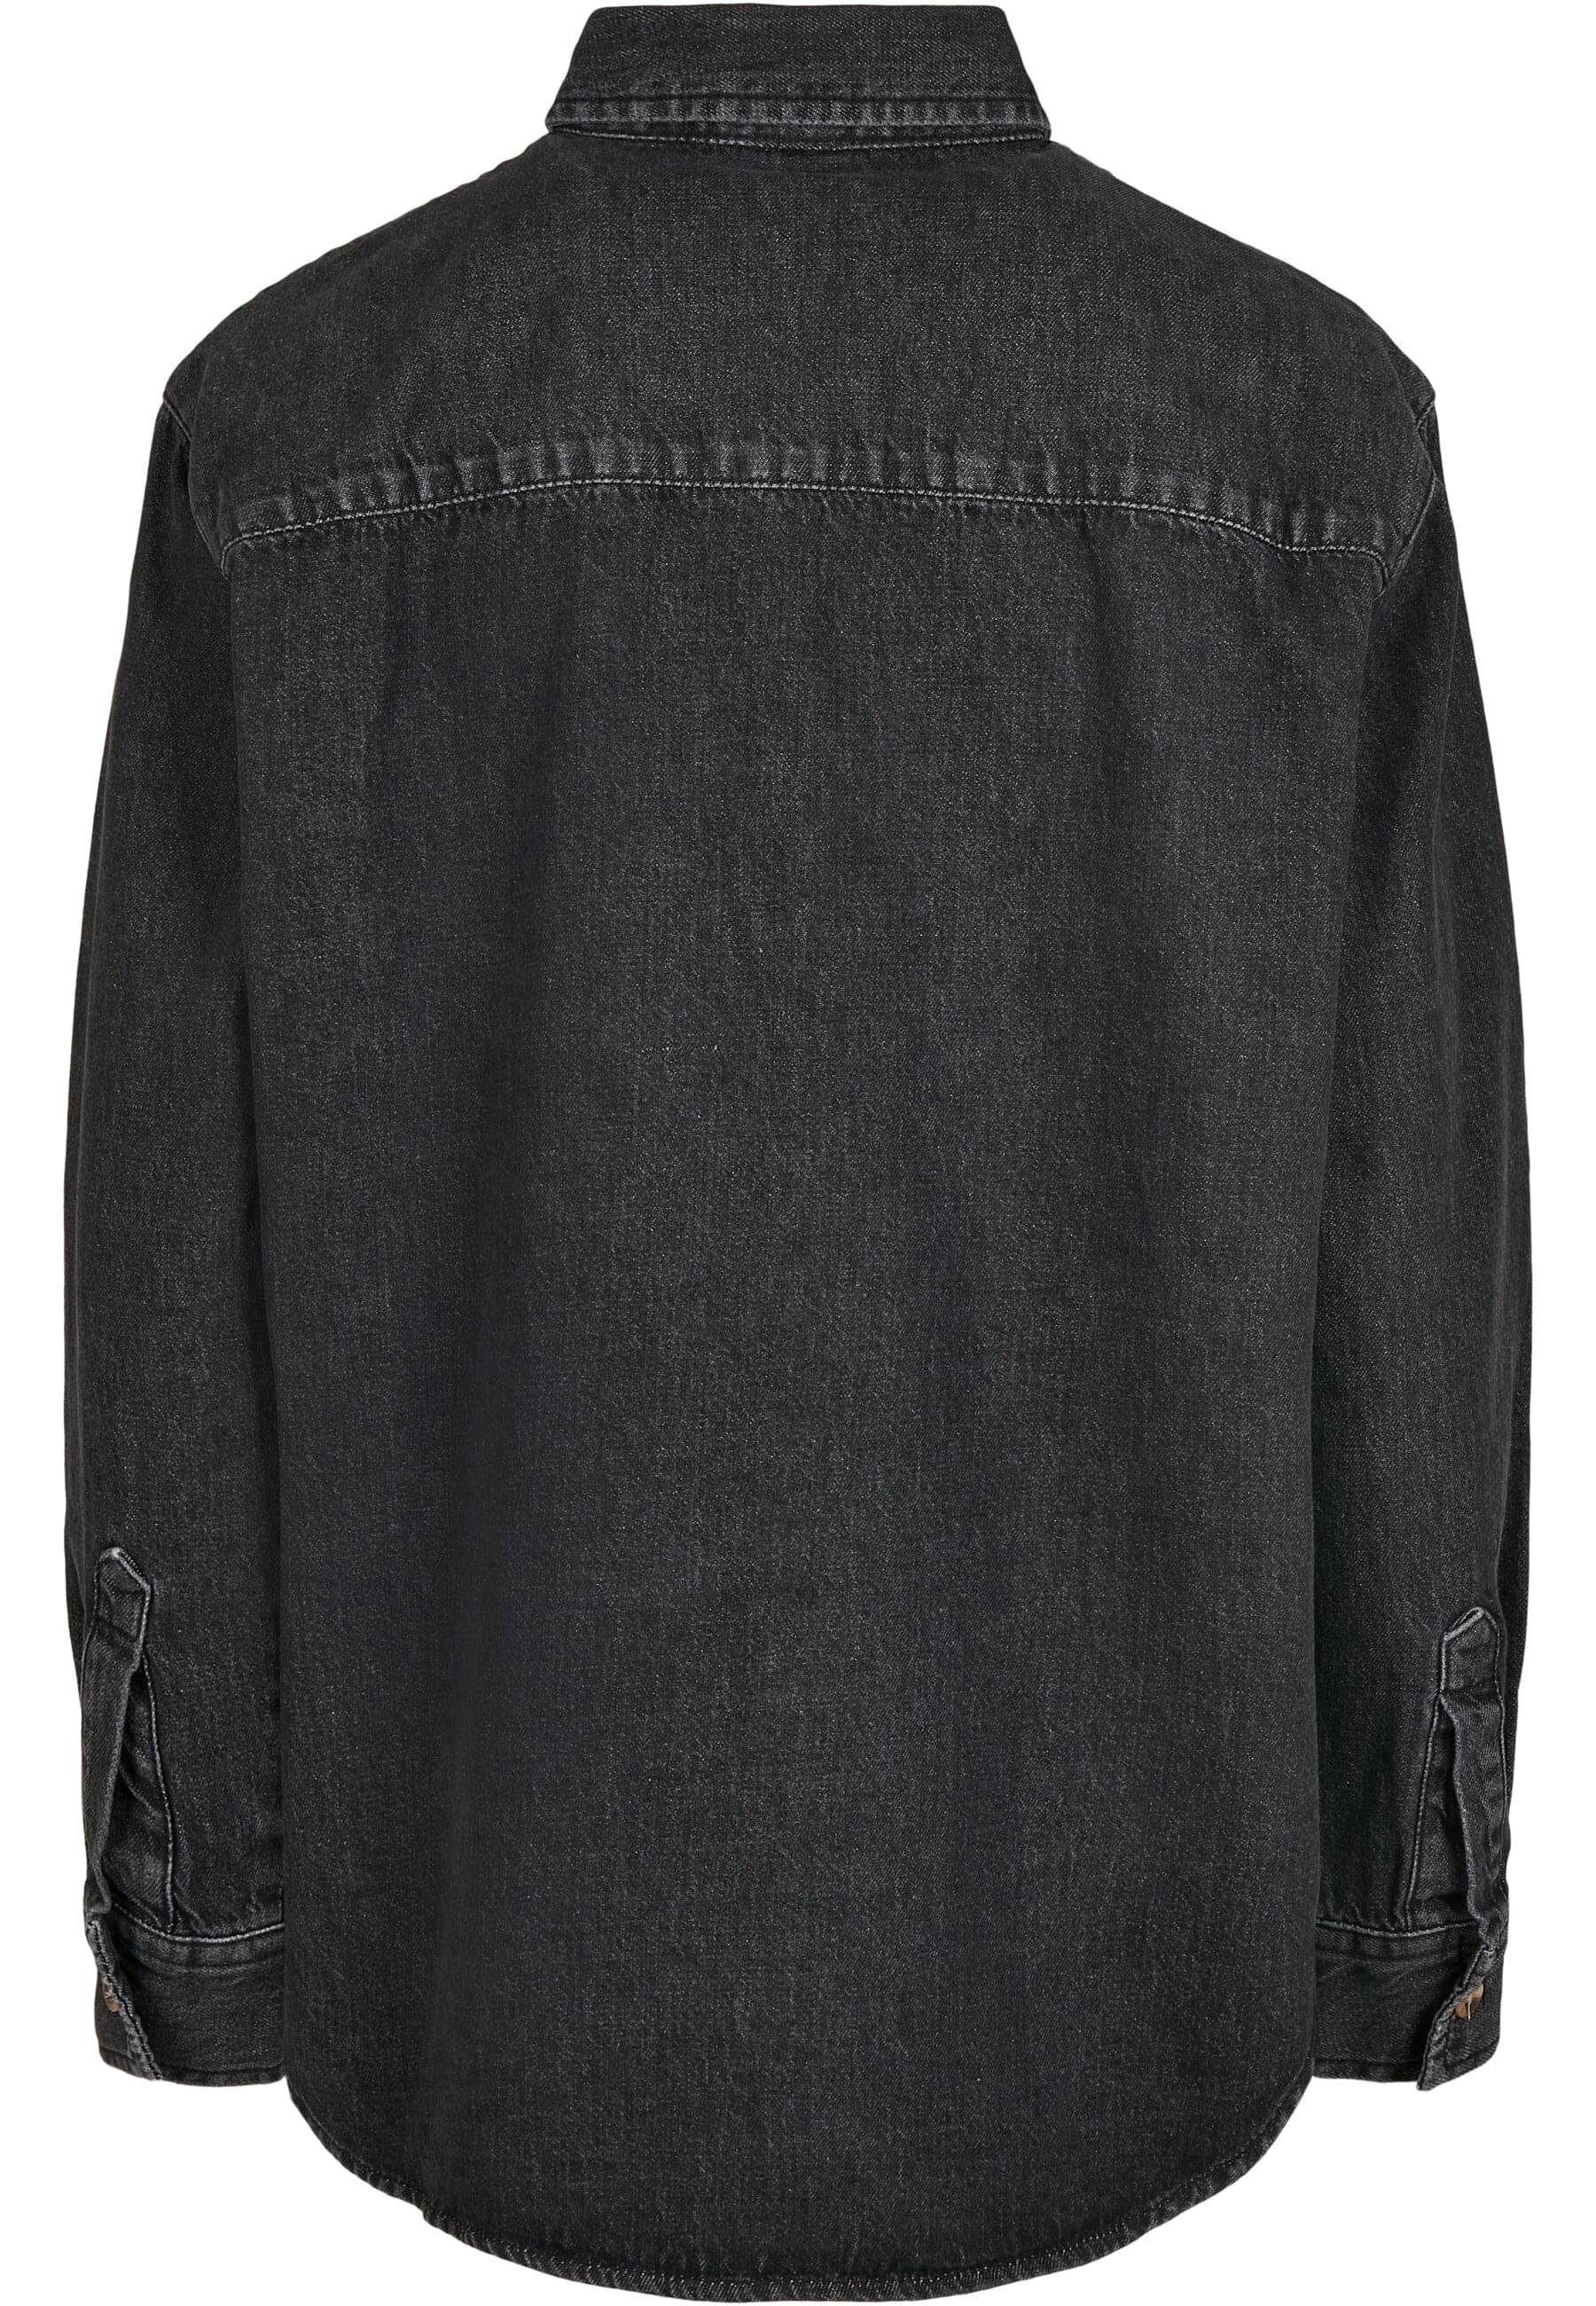 URBAN CLASSICS Klassische Bluse Damen black Shirt washed stone Oversized Denim Ladies